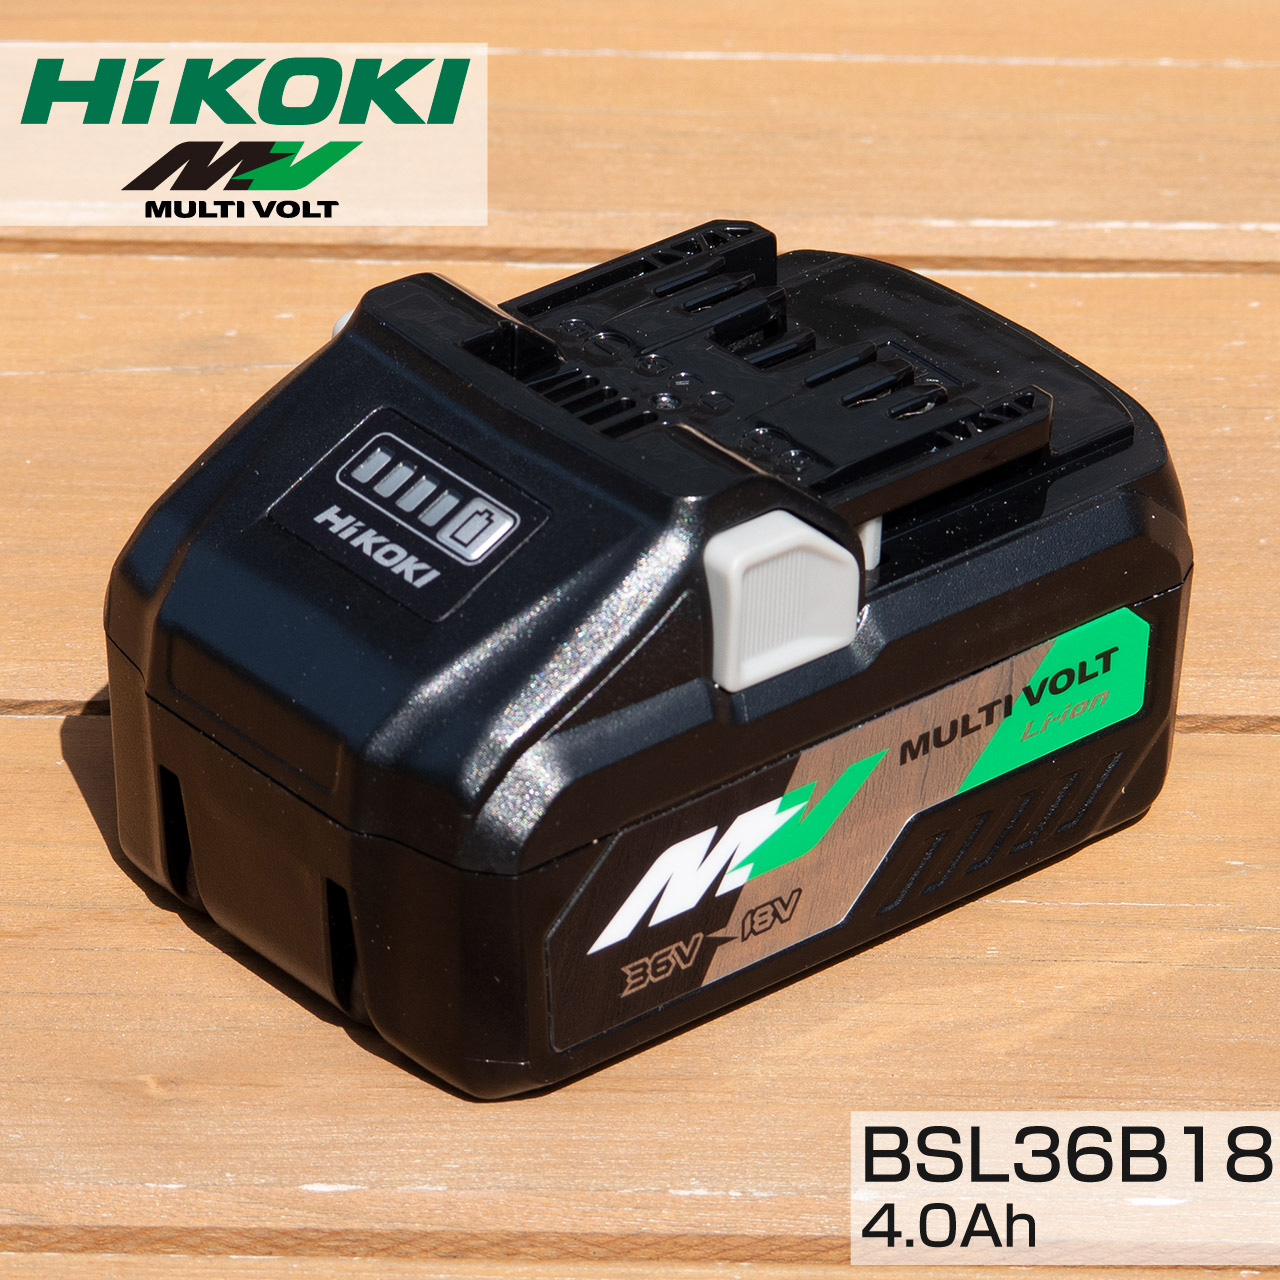 HiKOKI ハイコーキ マルチボルト リチウムイオン電池 バッテリー BSL36B18 4.0Ah